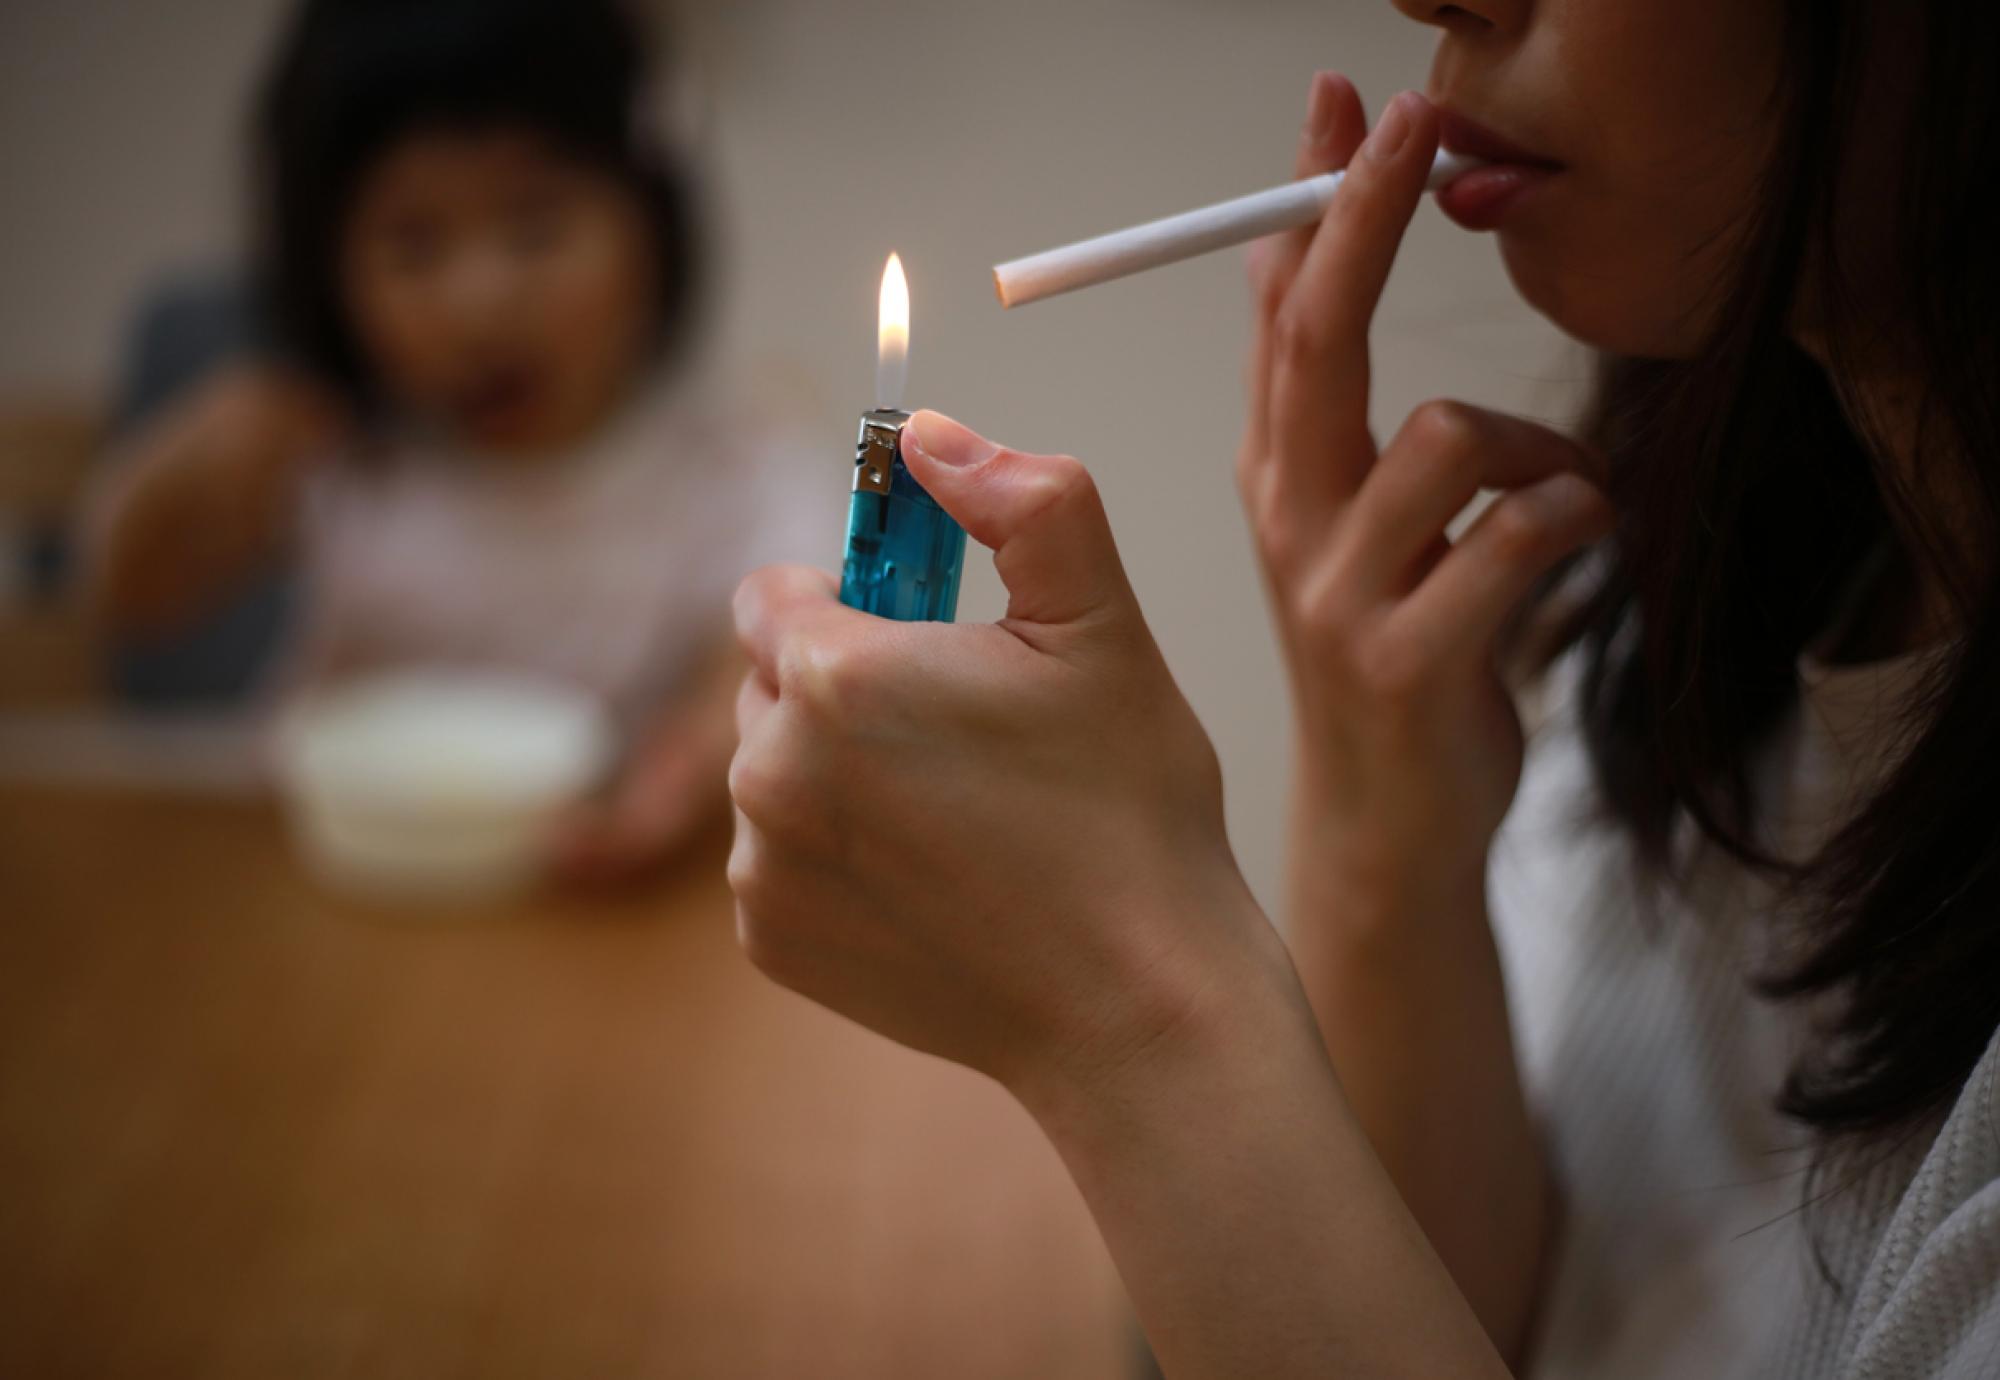 adult smoking near child 